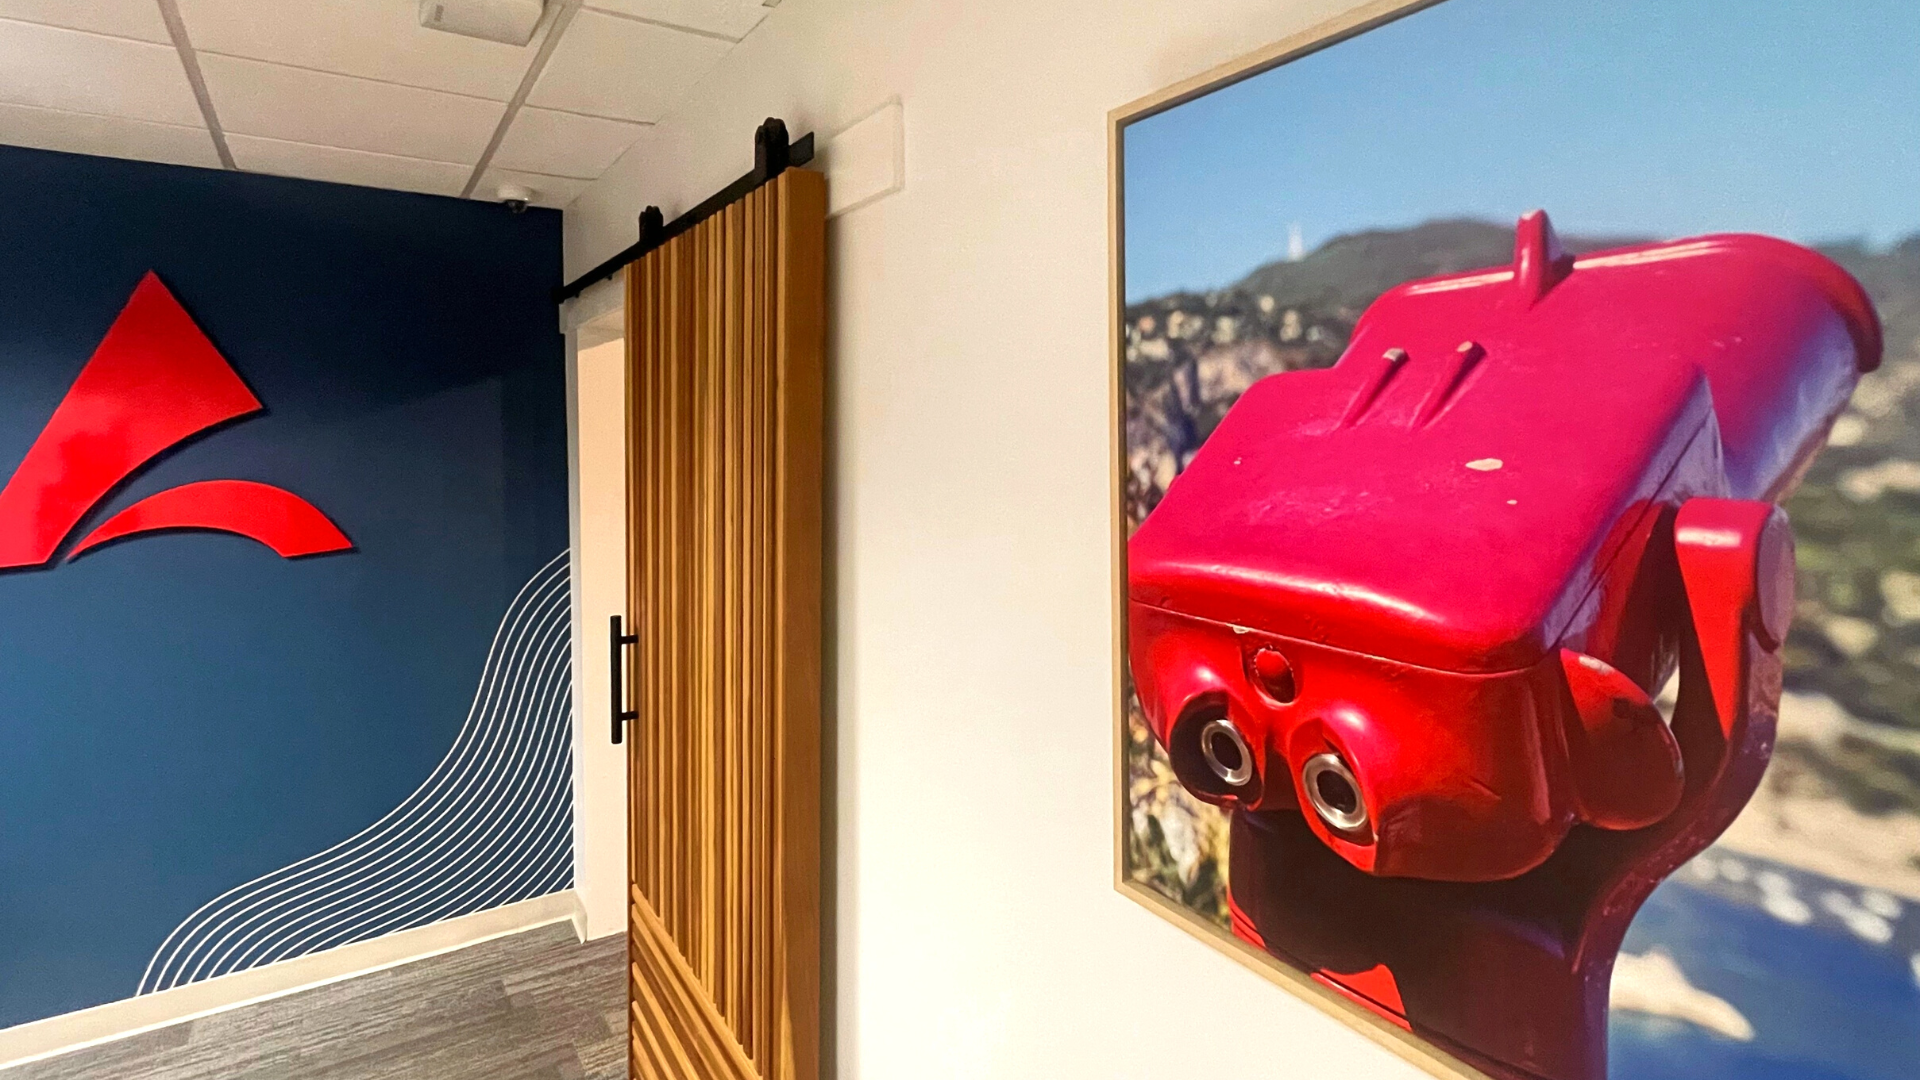 San Diego interior design of office space, blue wall, wood sliding door, red binocular photo framed on wall